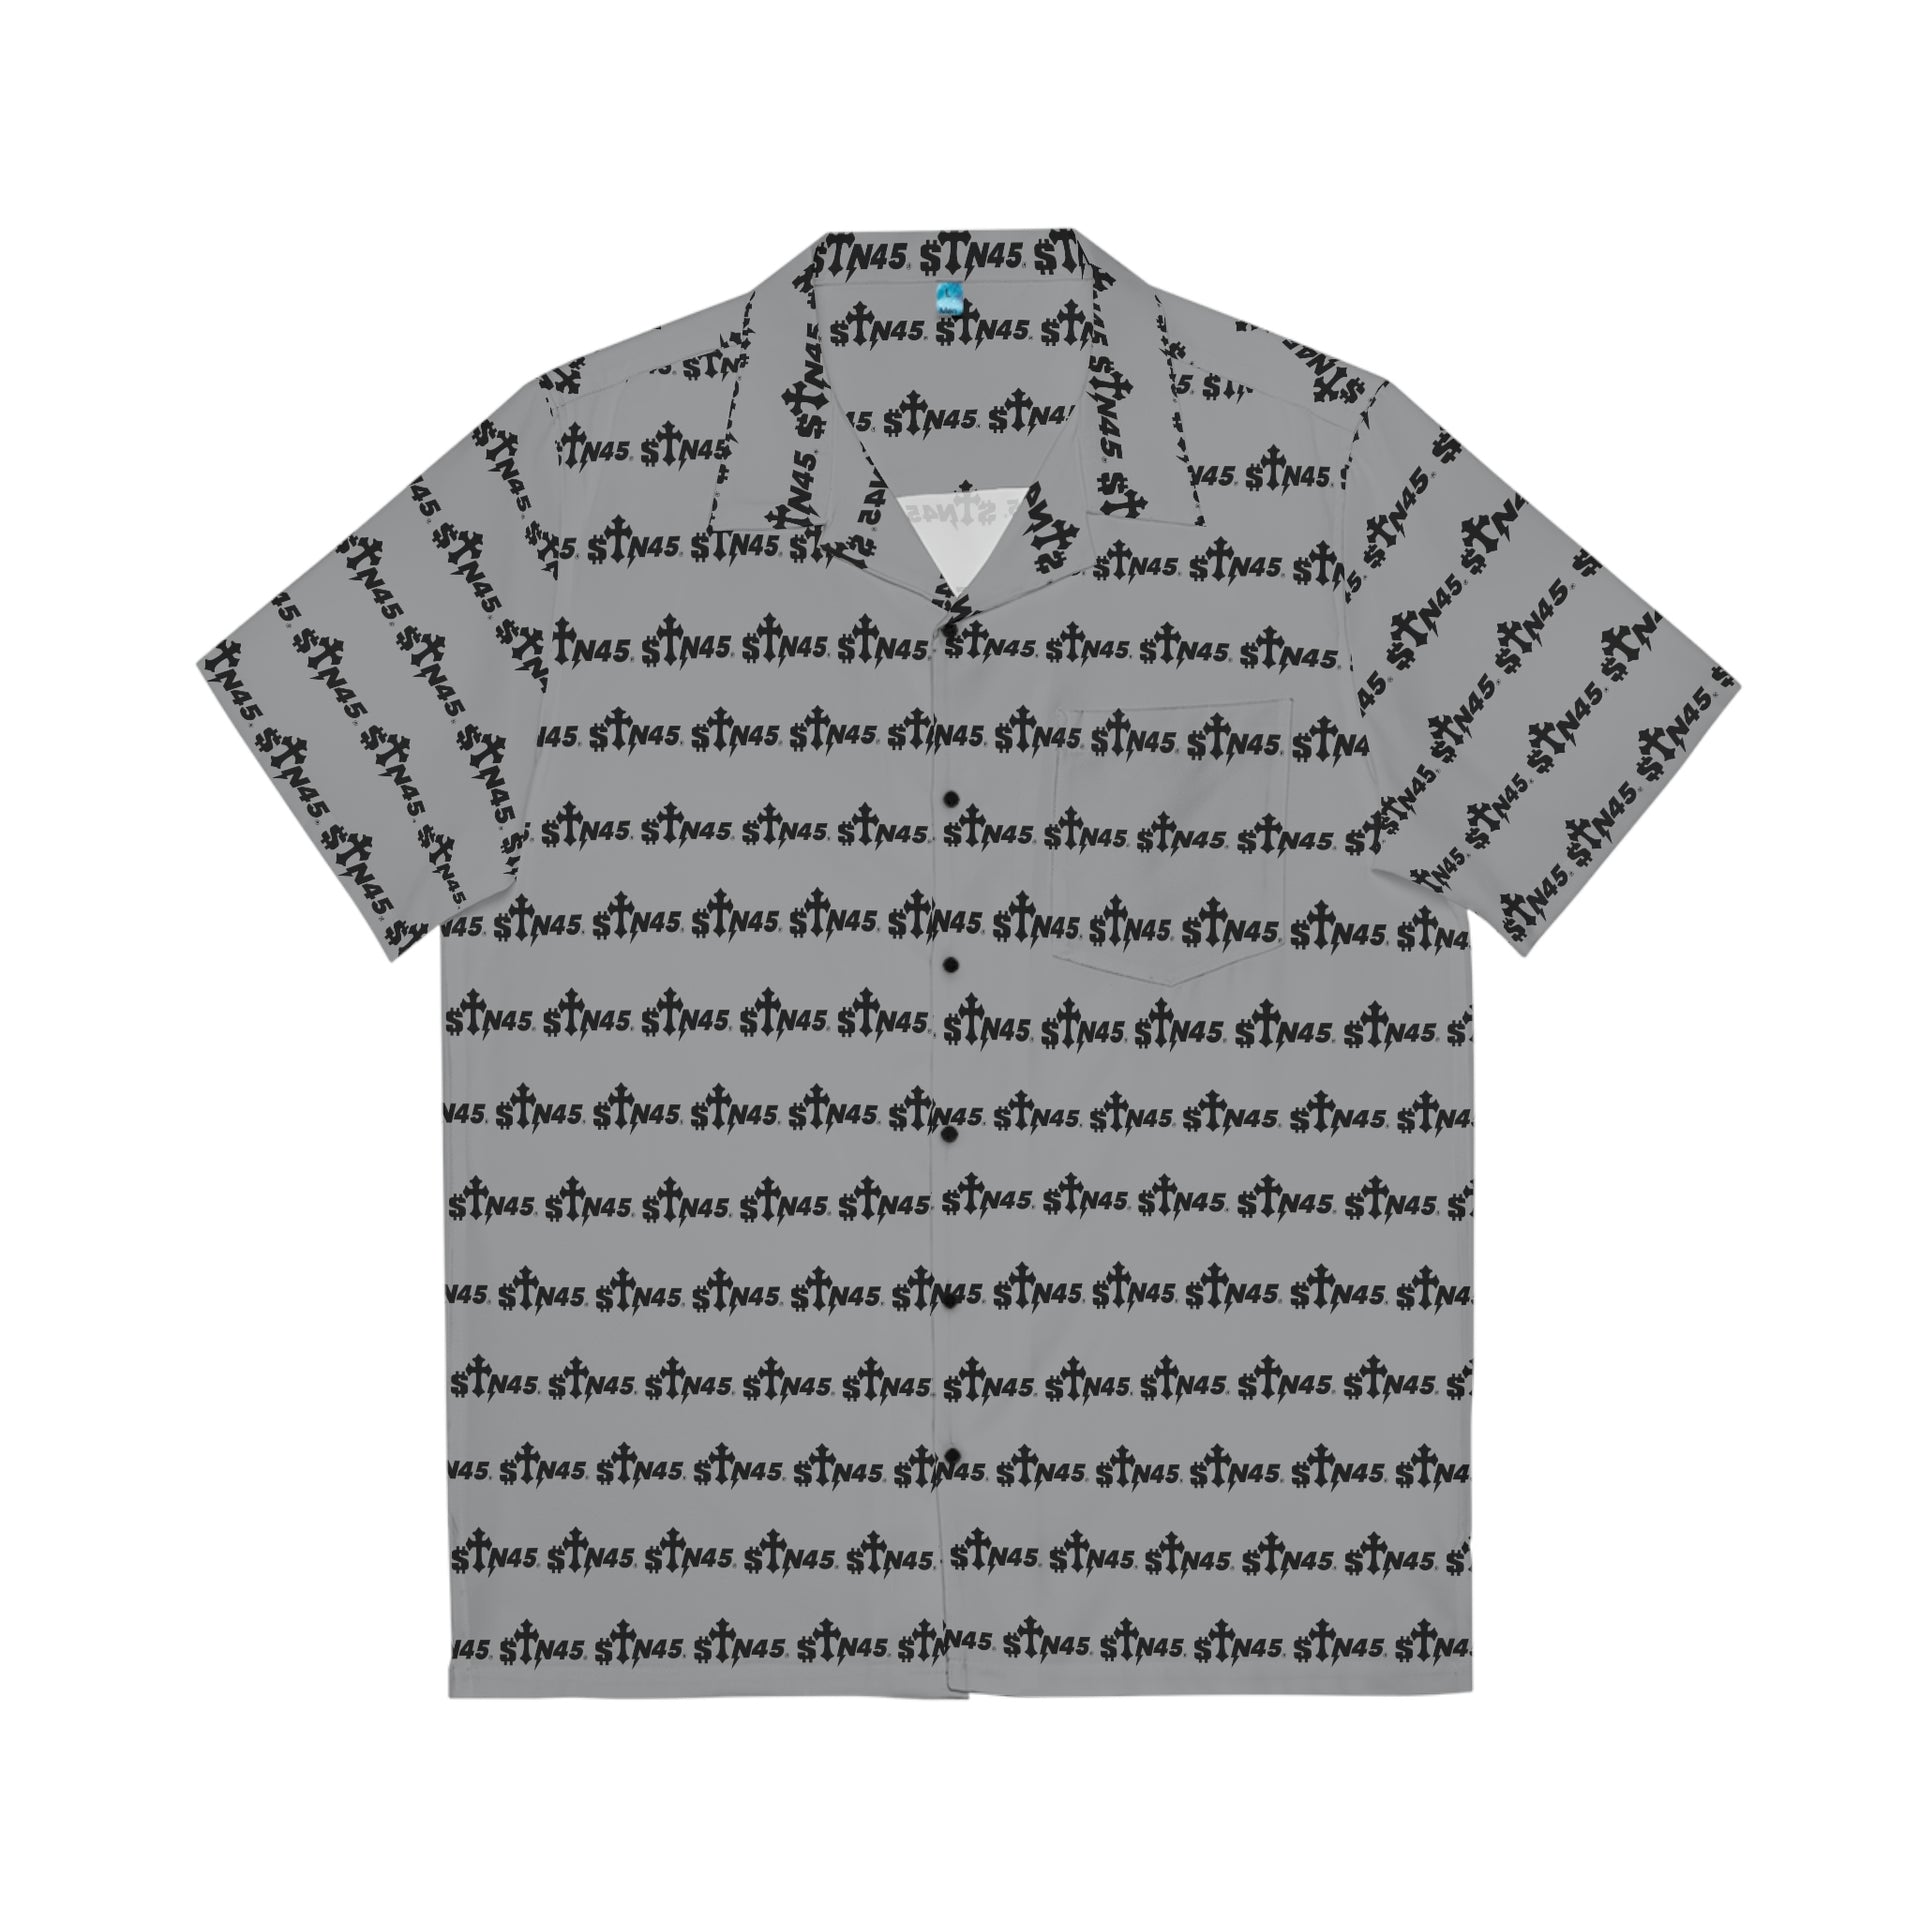 RP X MAS LV-All-Over Print Men's Hawaiian Shirt - Real Team Shop